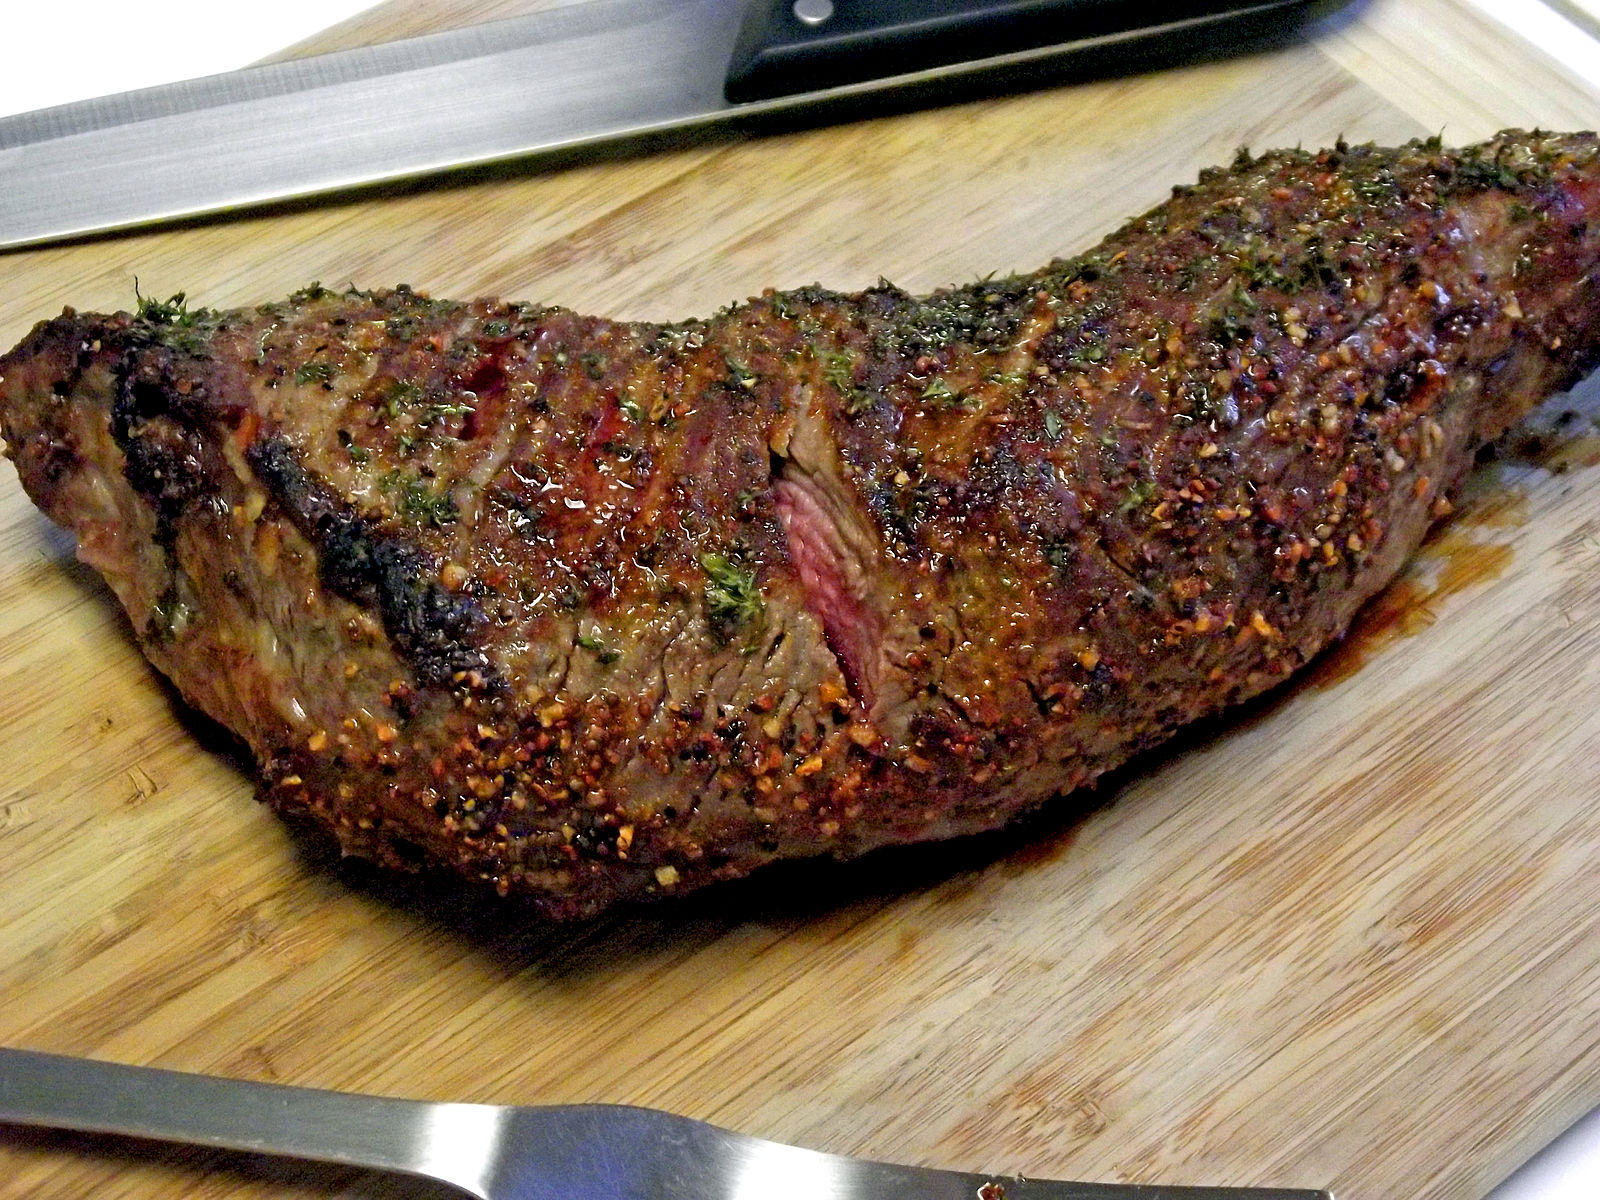 A grilled tri-tip steak on a cutting board. Courtesy: Mark Miller [CC BY-SA 3.0]